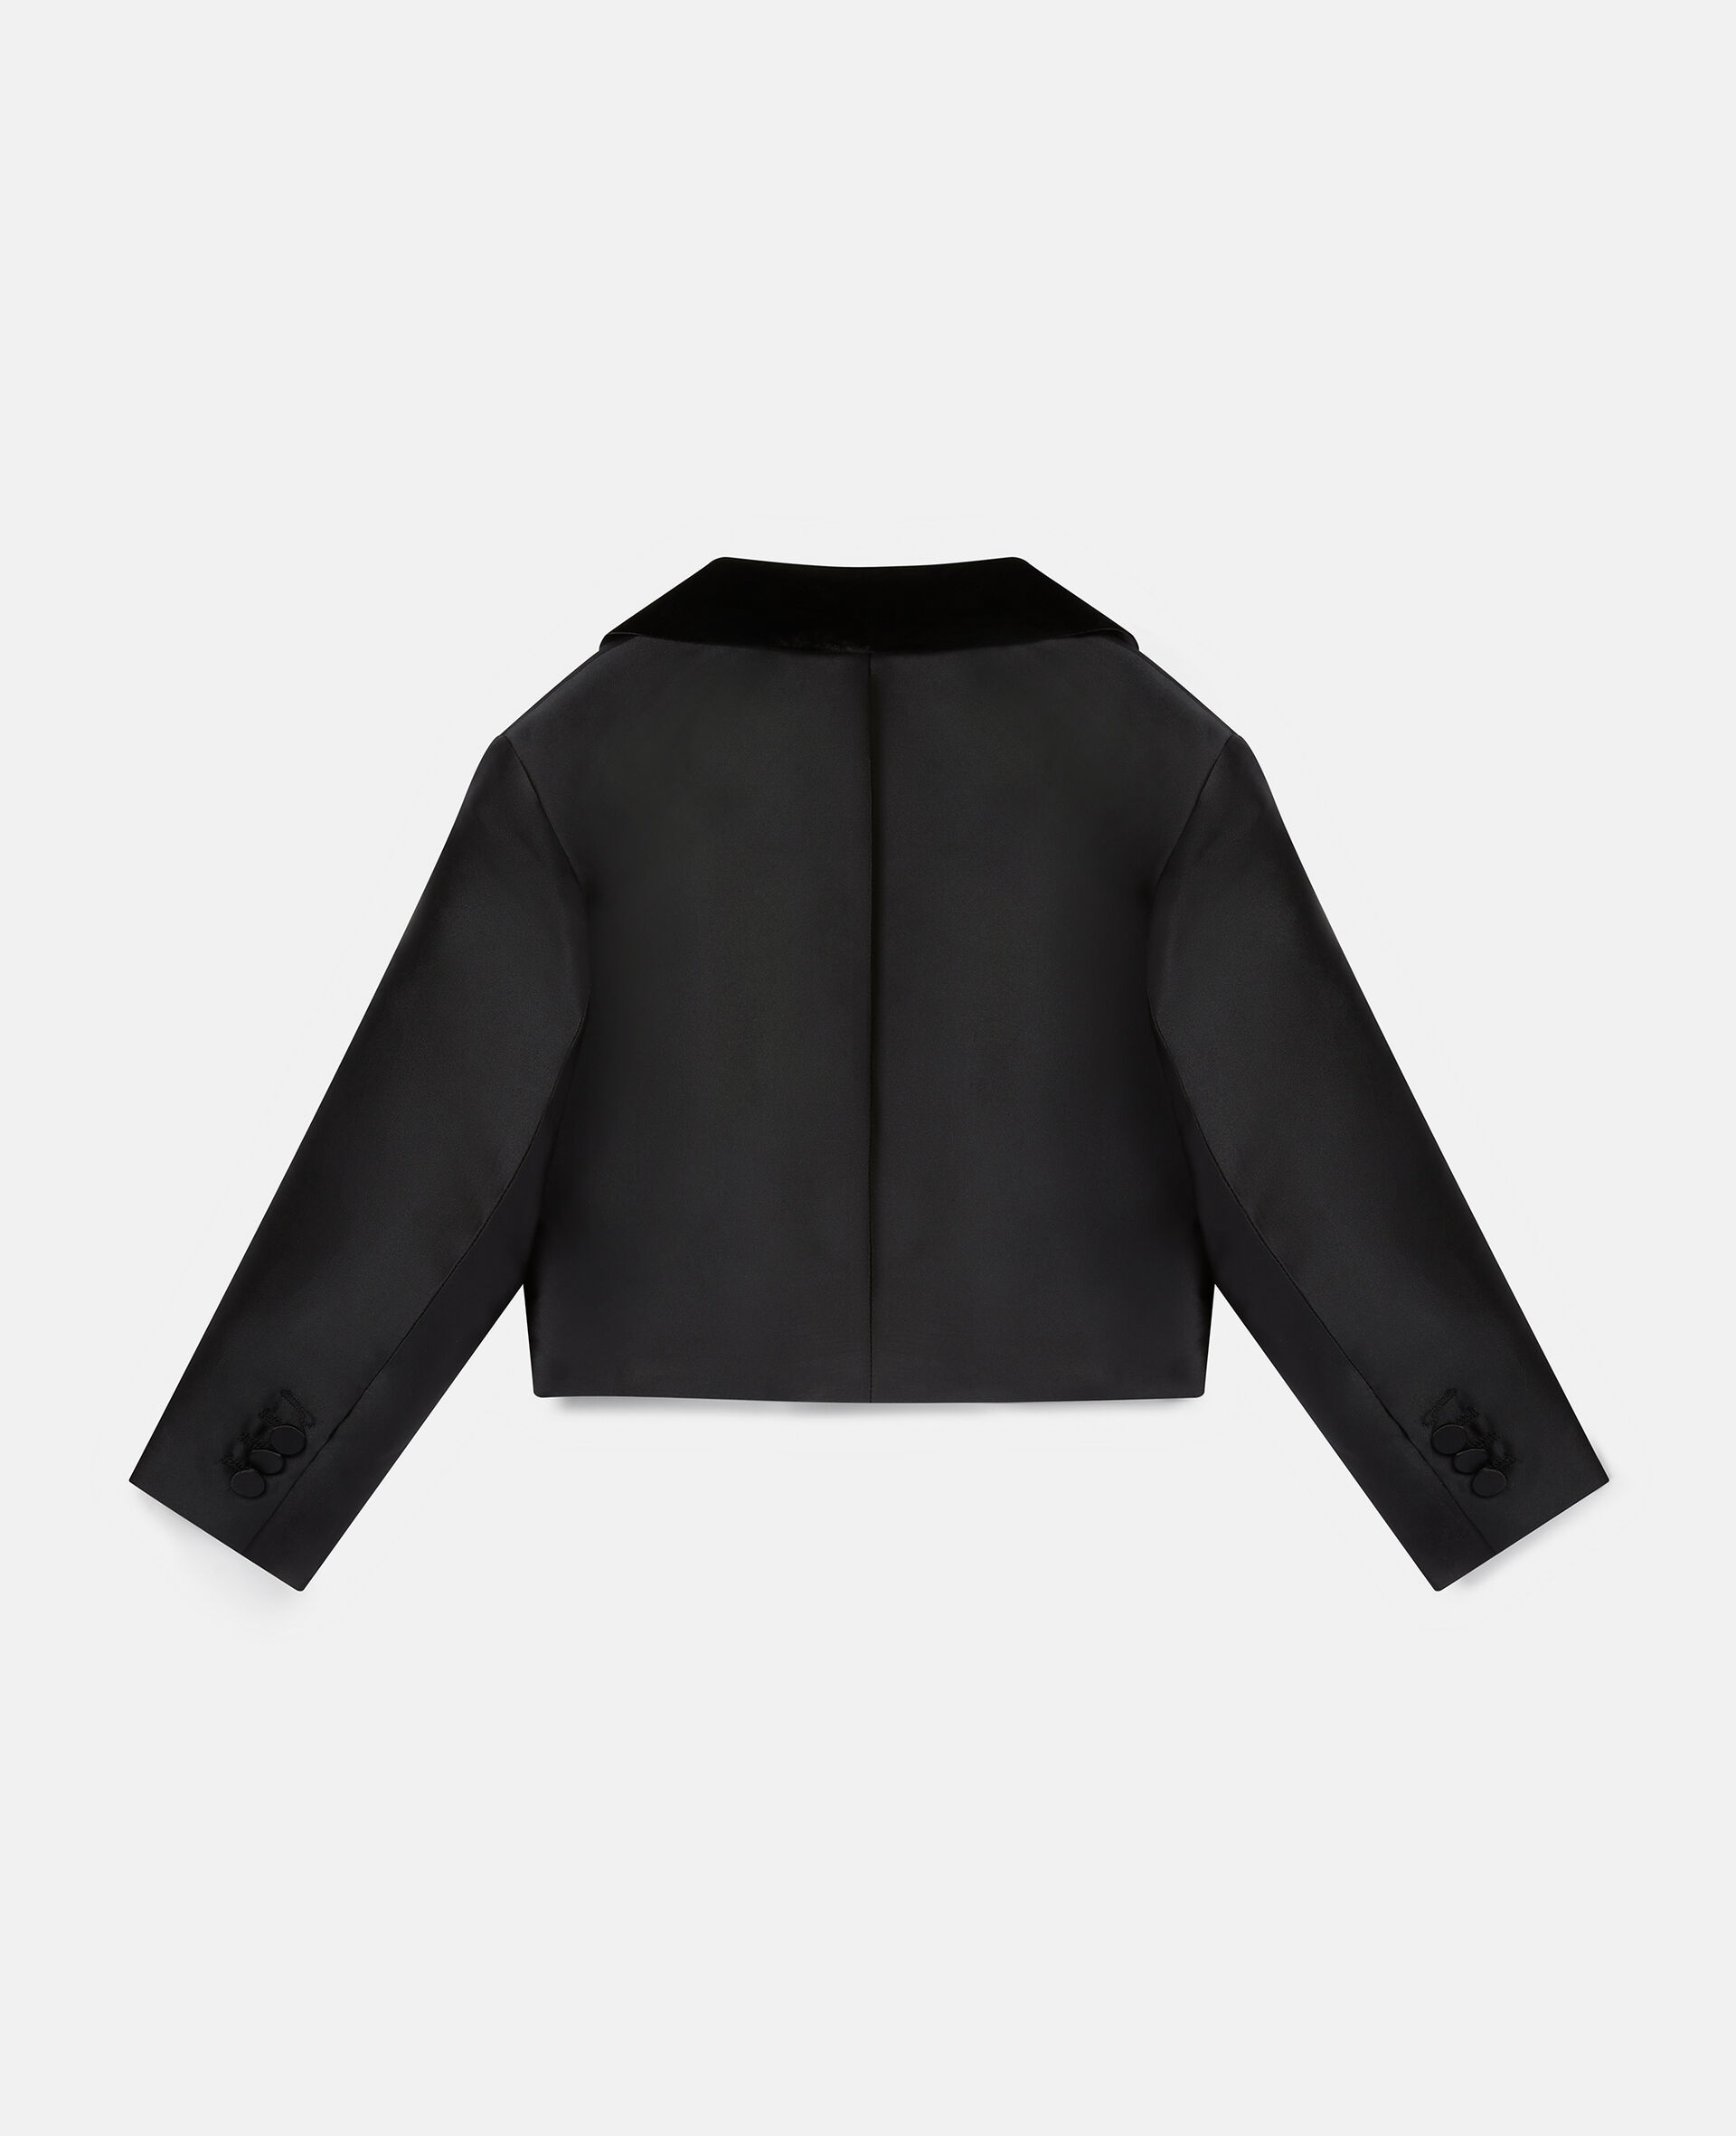 Bow Suit Jacket-Black-large image number 1